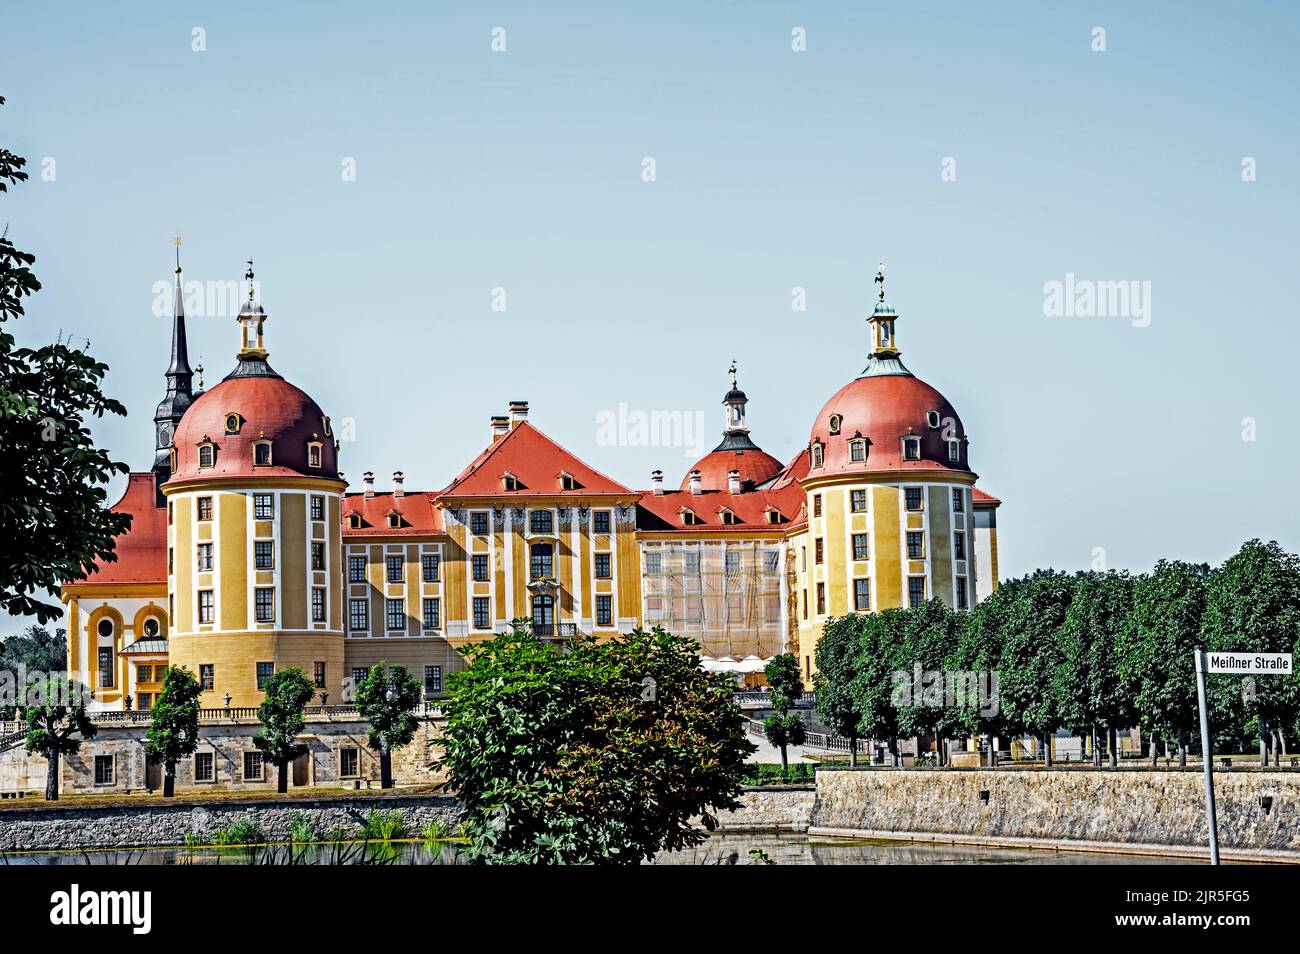 Schloss Moritzburg, Sachsen - Schloss Moritzburg bei Dresden, Sachsen, Deutschland Stockfoto